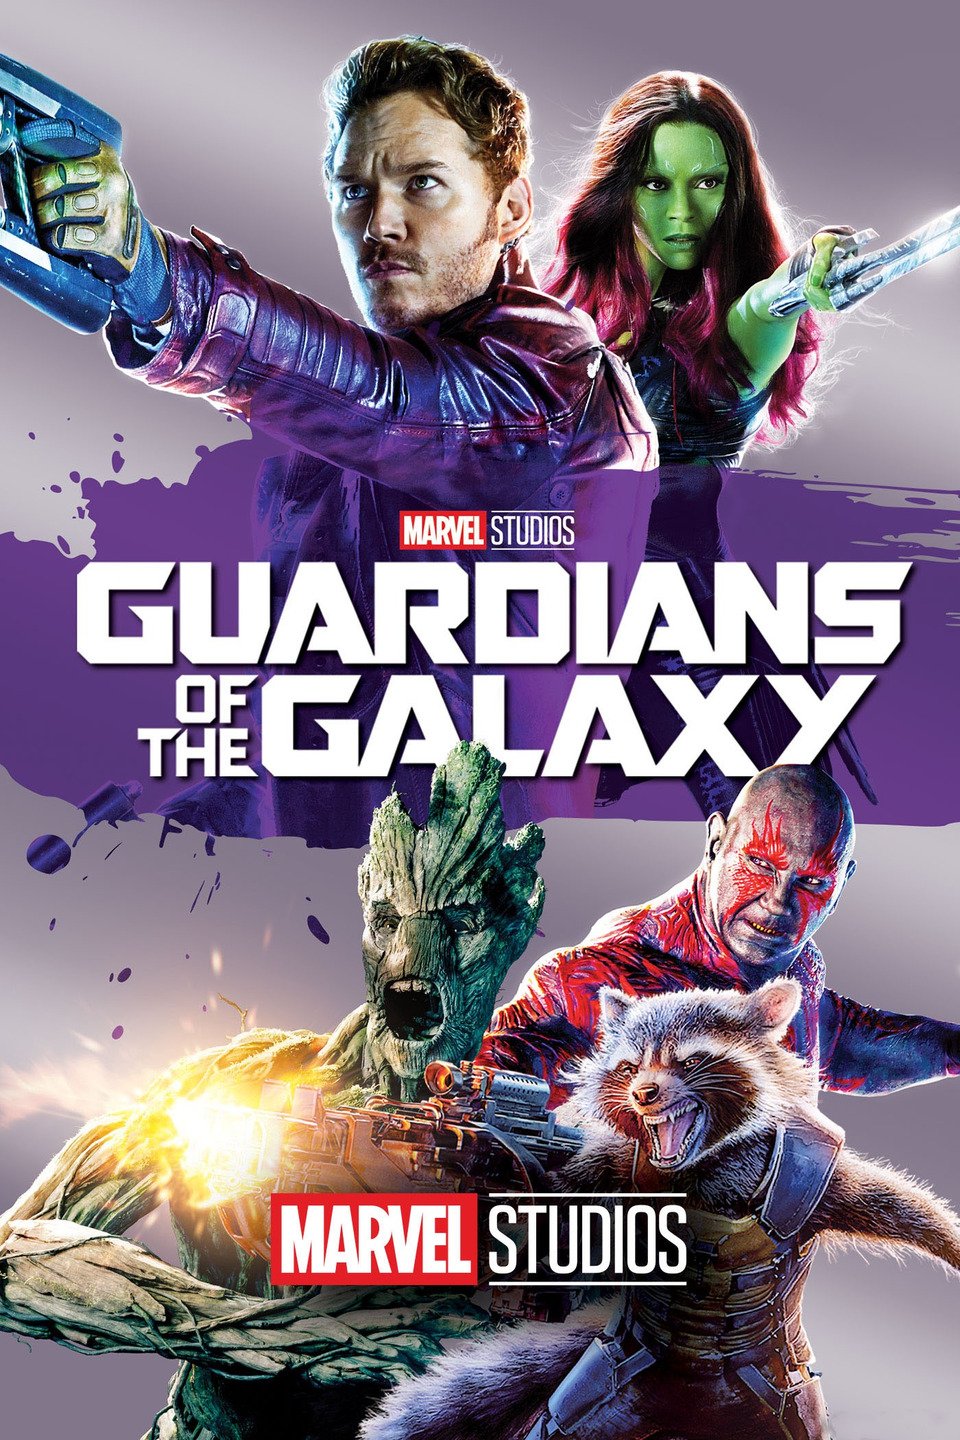 [MINI Super-HQ] Guardians of the Galaxy (2014) รวมพันธุ์นักสู้พิทักษ์จักรวาล [1080p] [พากย์ไทย DTS + อังกฤษ DTS] [บรรยายไทย + อังกฤษ] [เสียงไทย + ซับไทย] [ONE2UP]